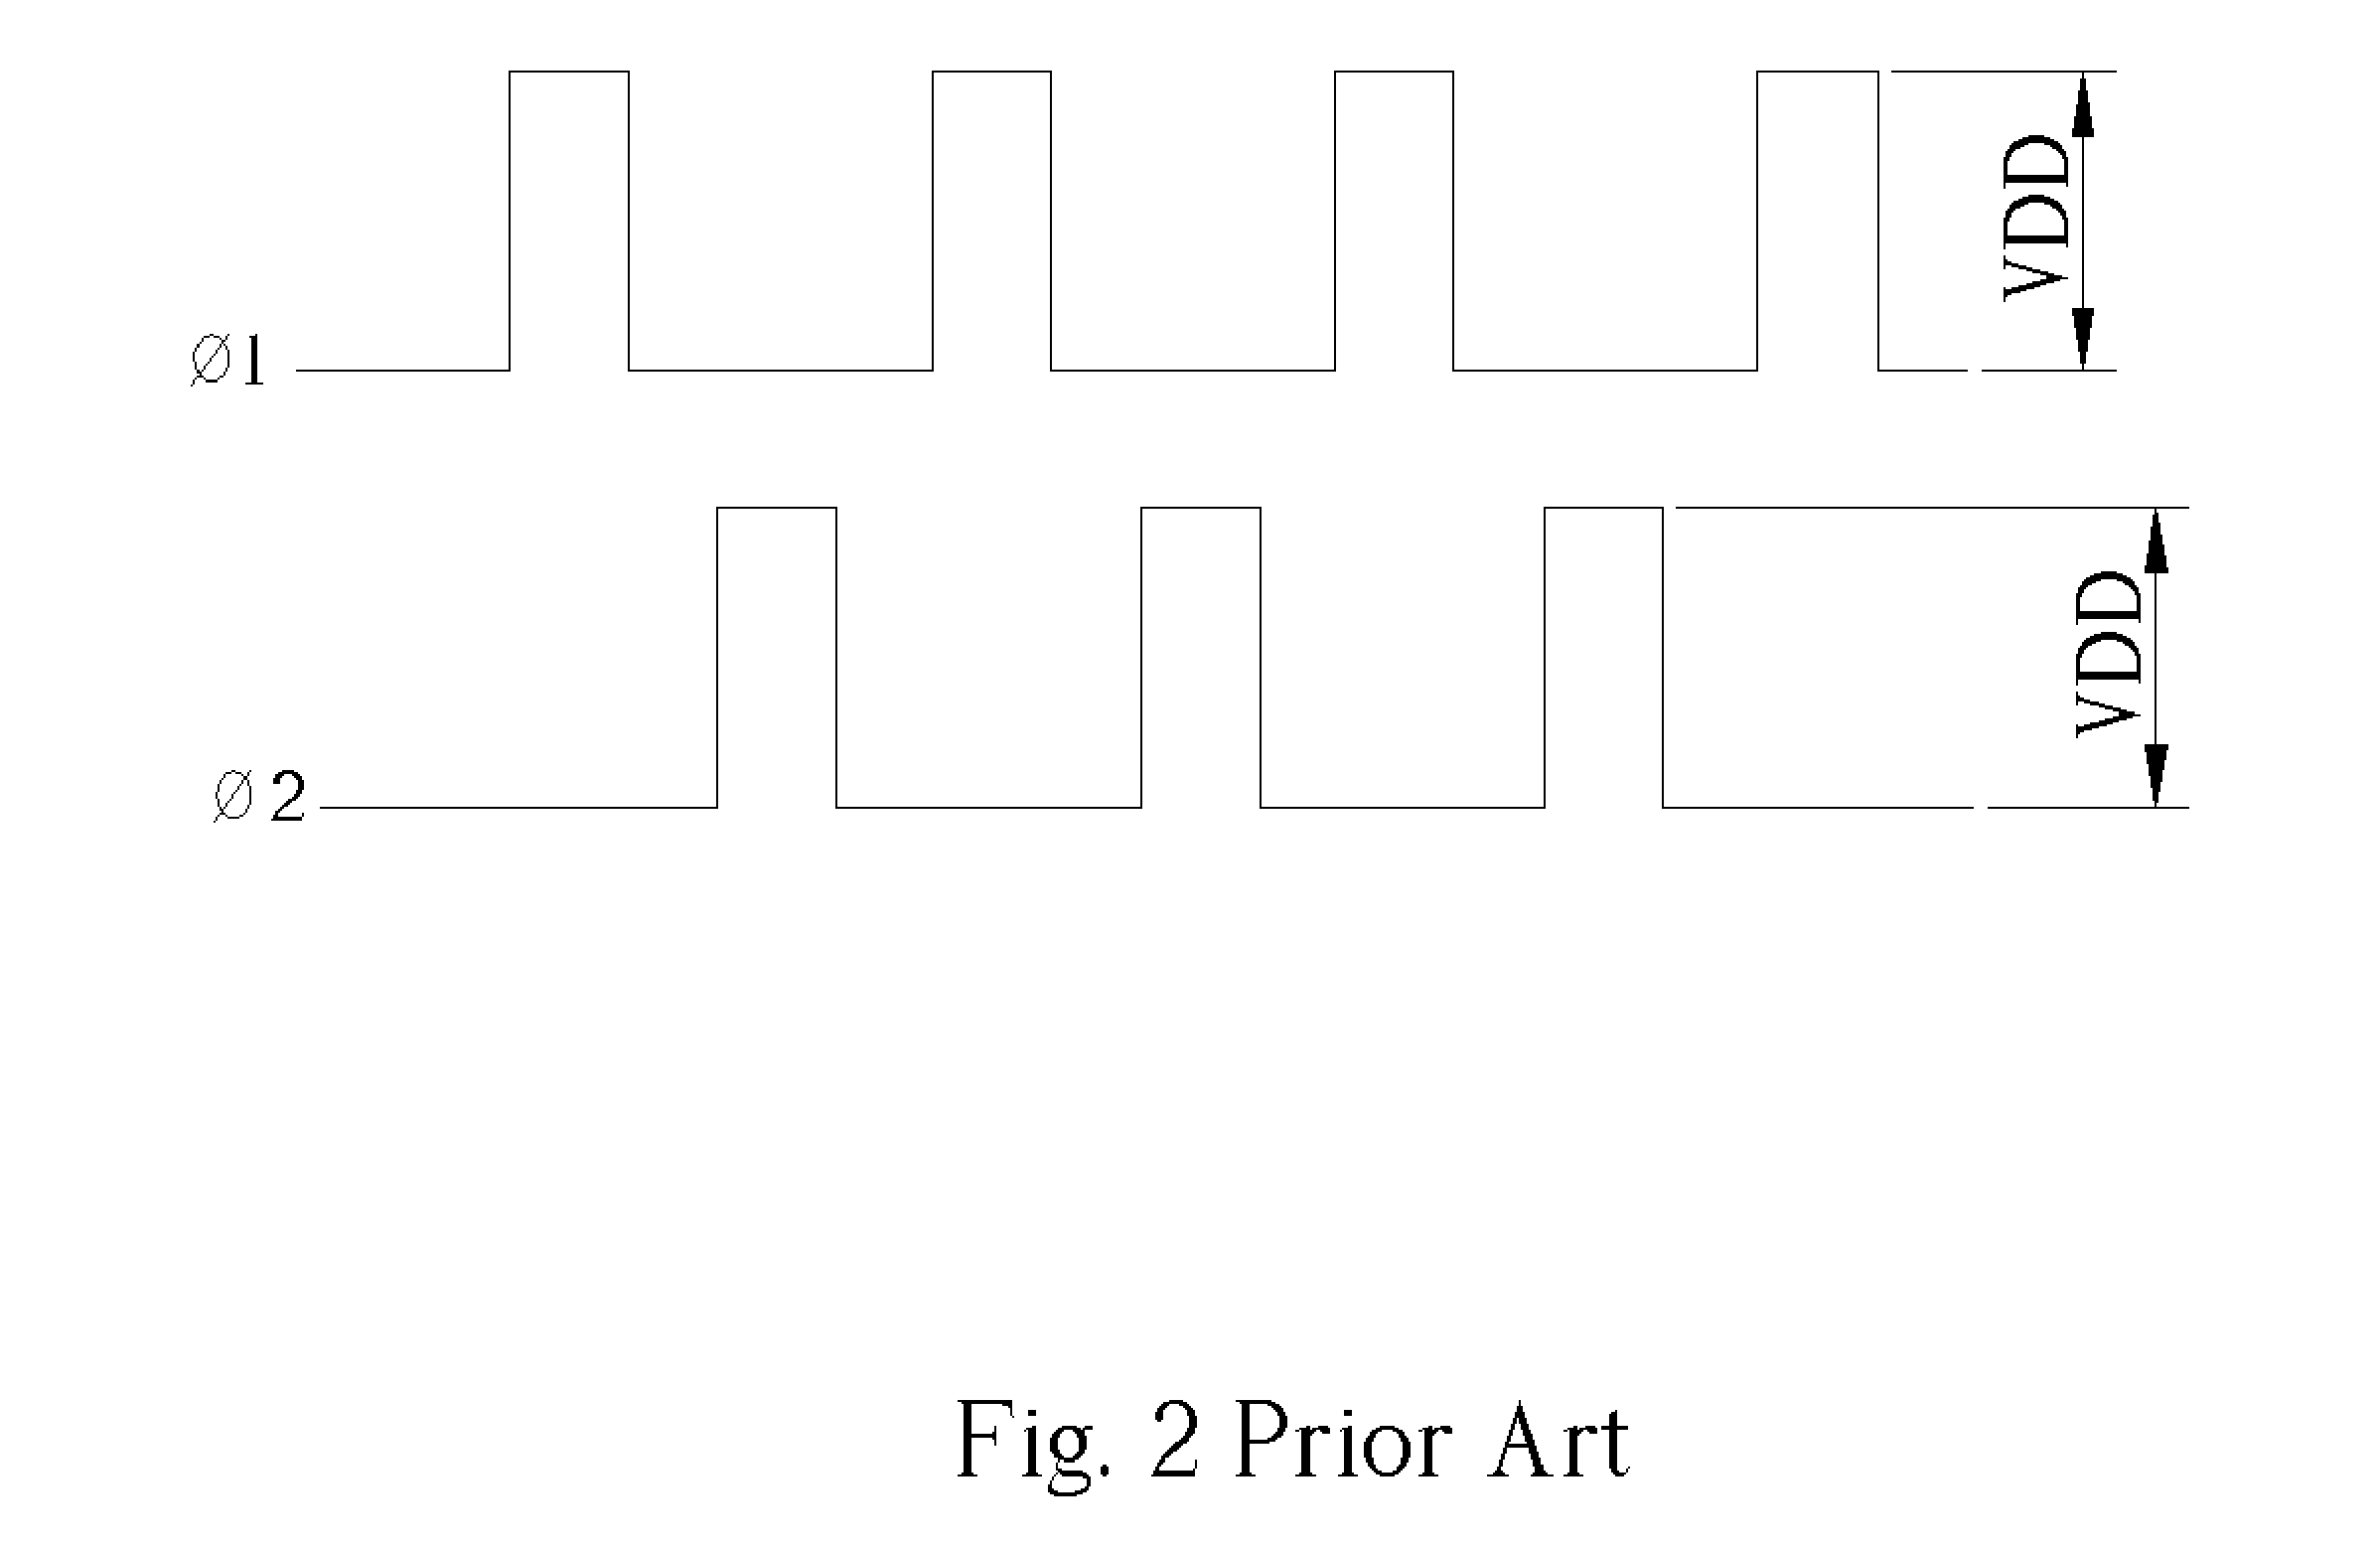 Four-phase dual pumping circuit